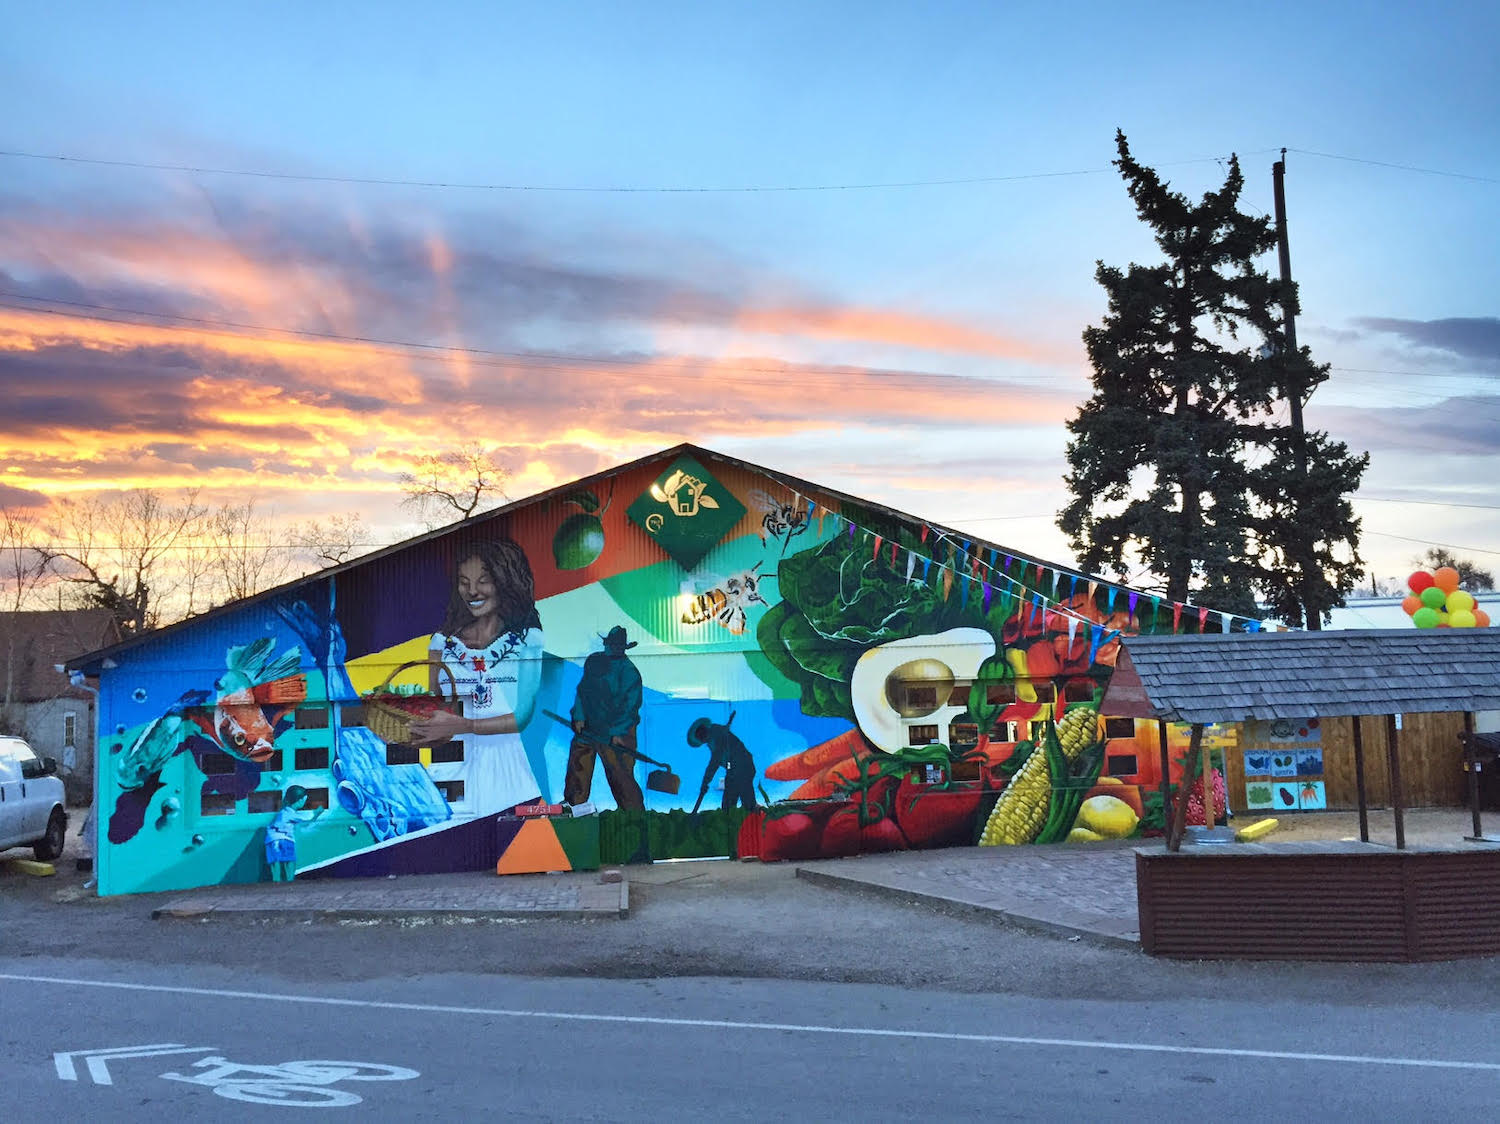 GrowHaus exterior mural at sunset July 2020